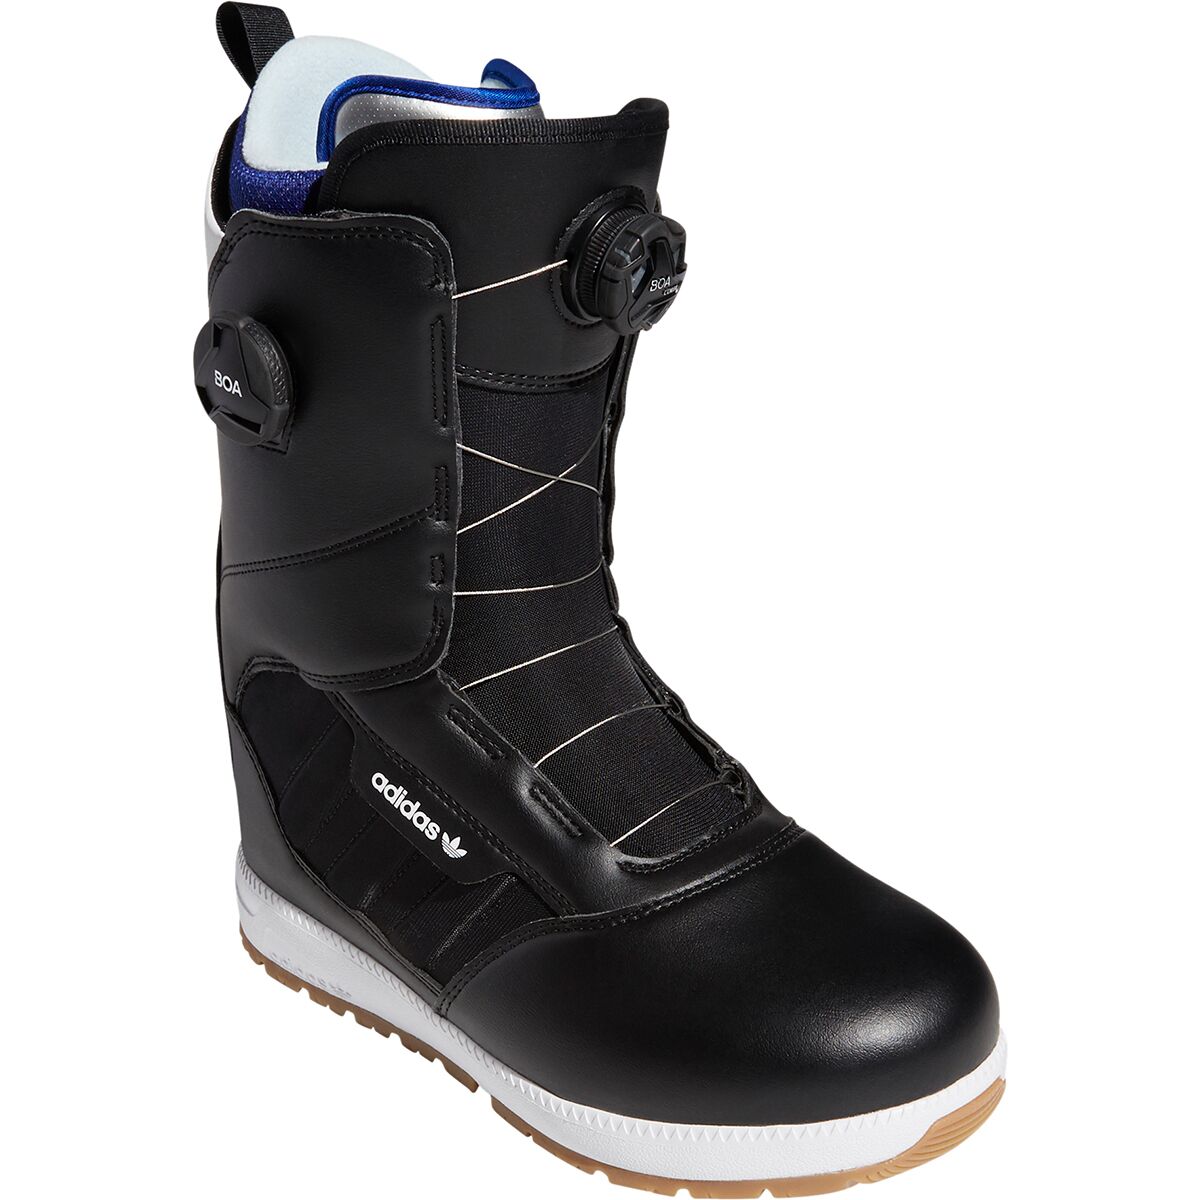 adidas response snowboard boot